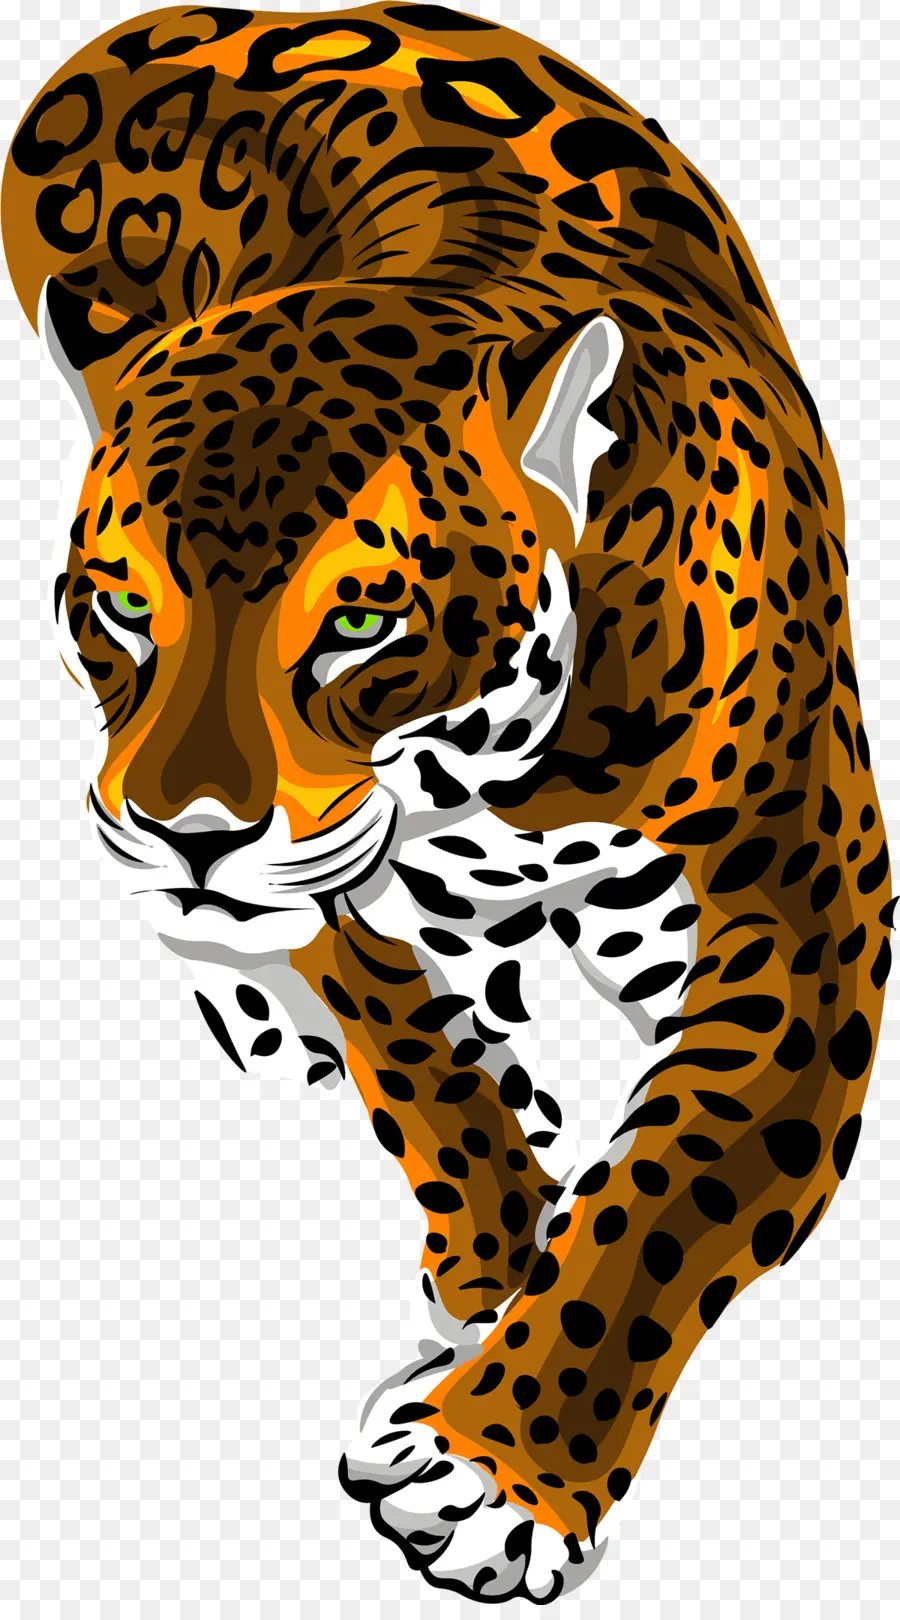 A Vida Selvagem，Cheetah PNG